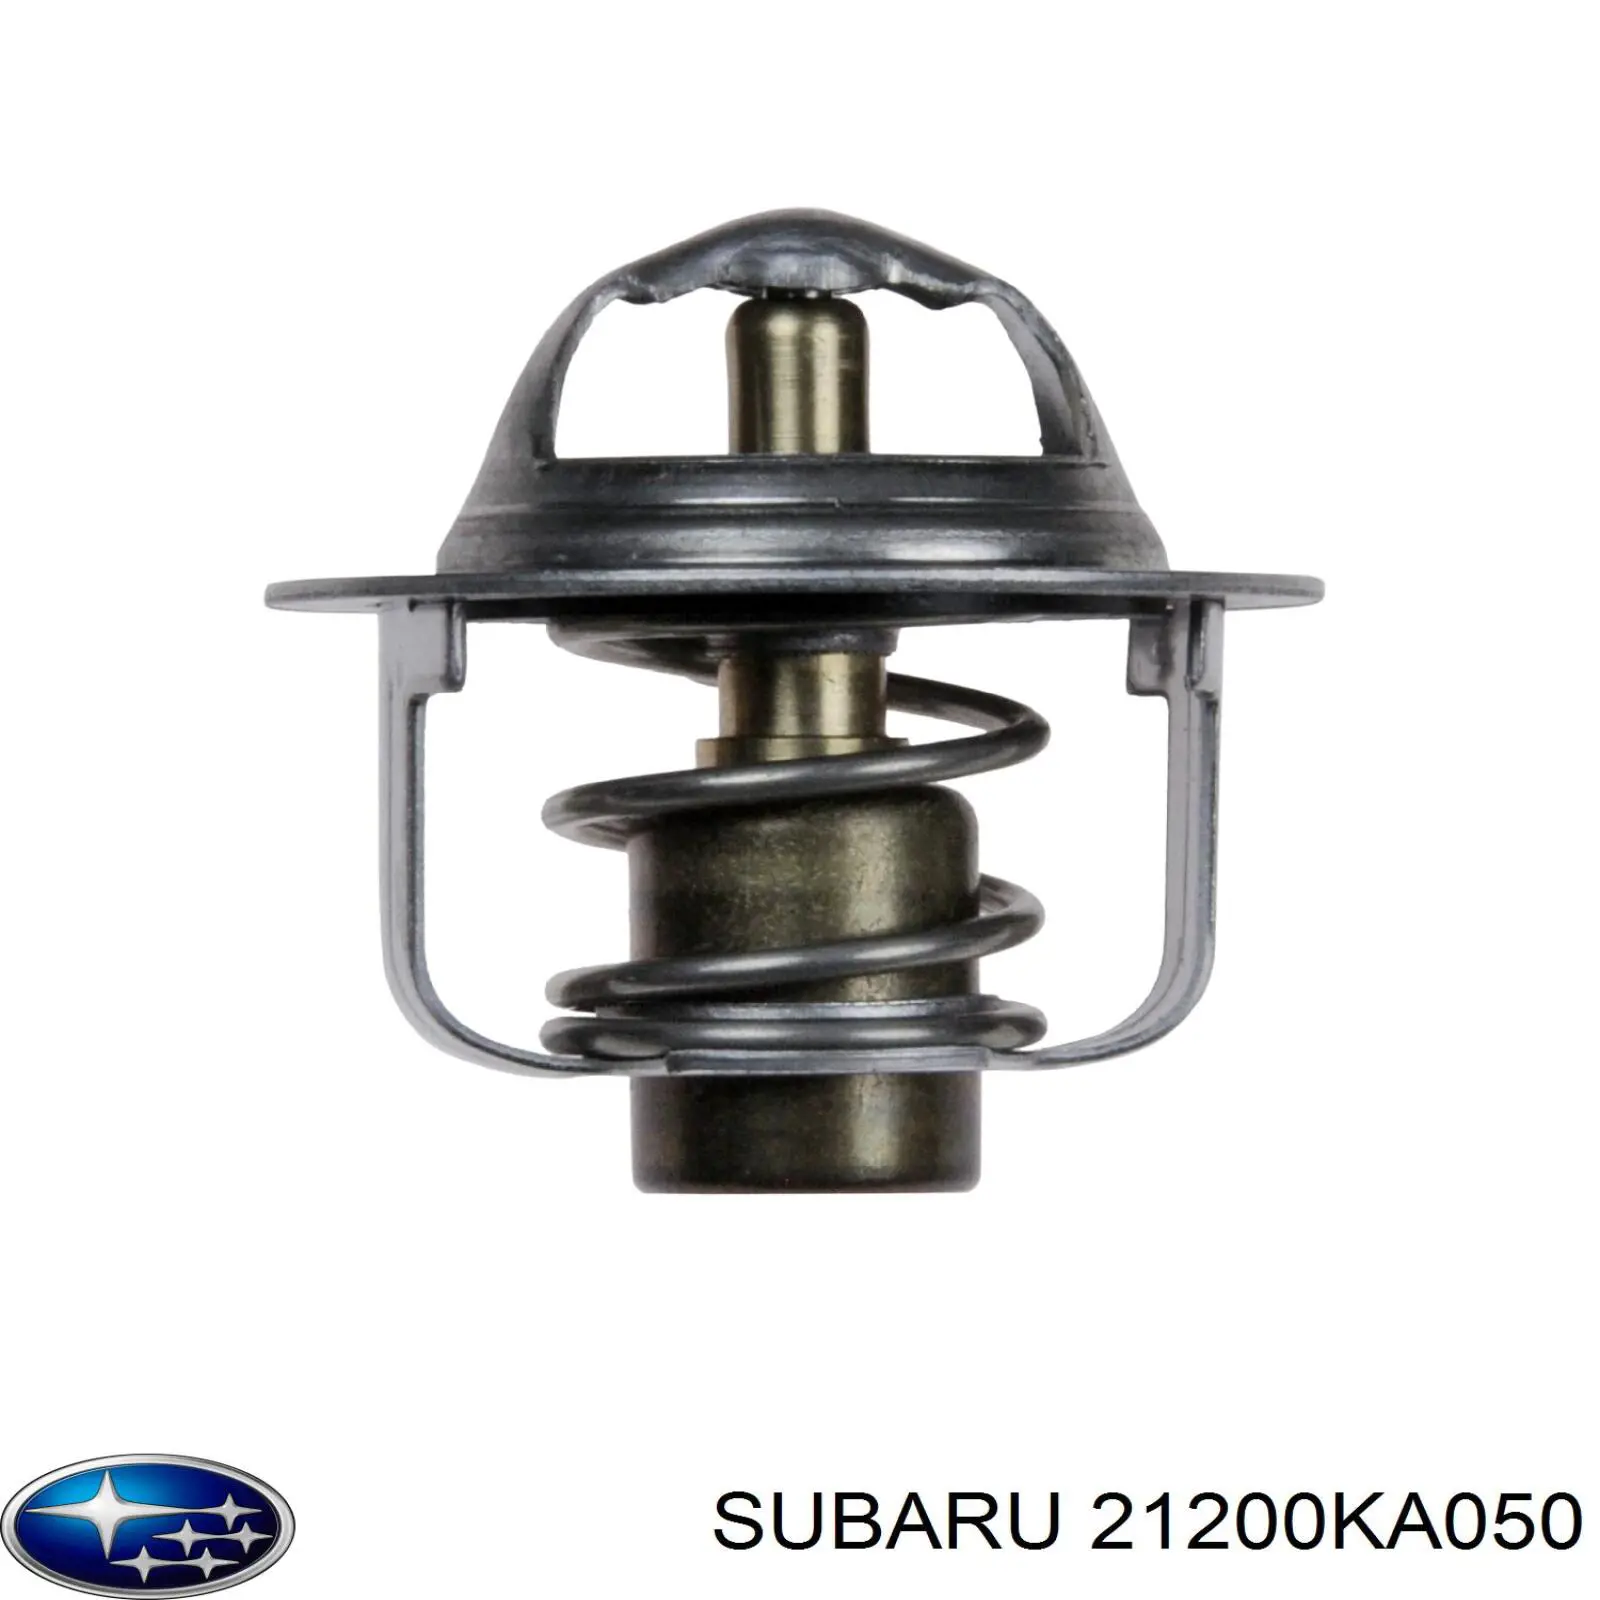 21200KA050 Subaru termostato